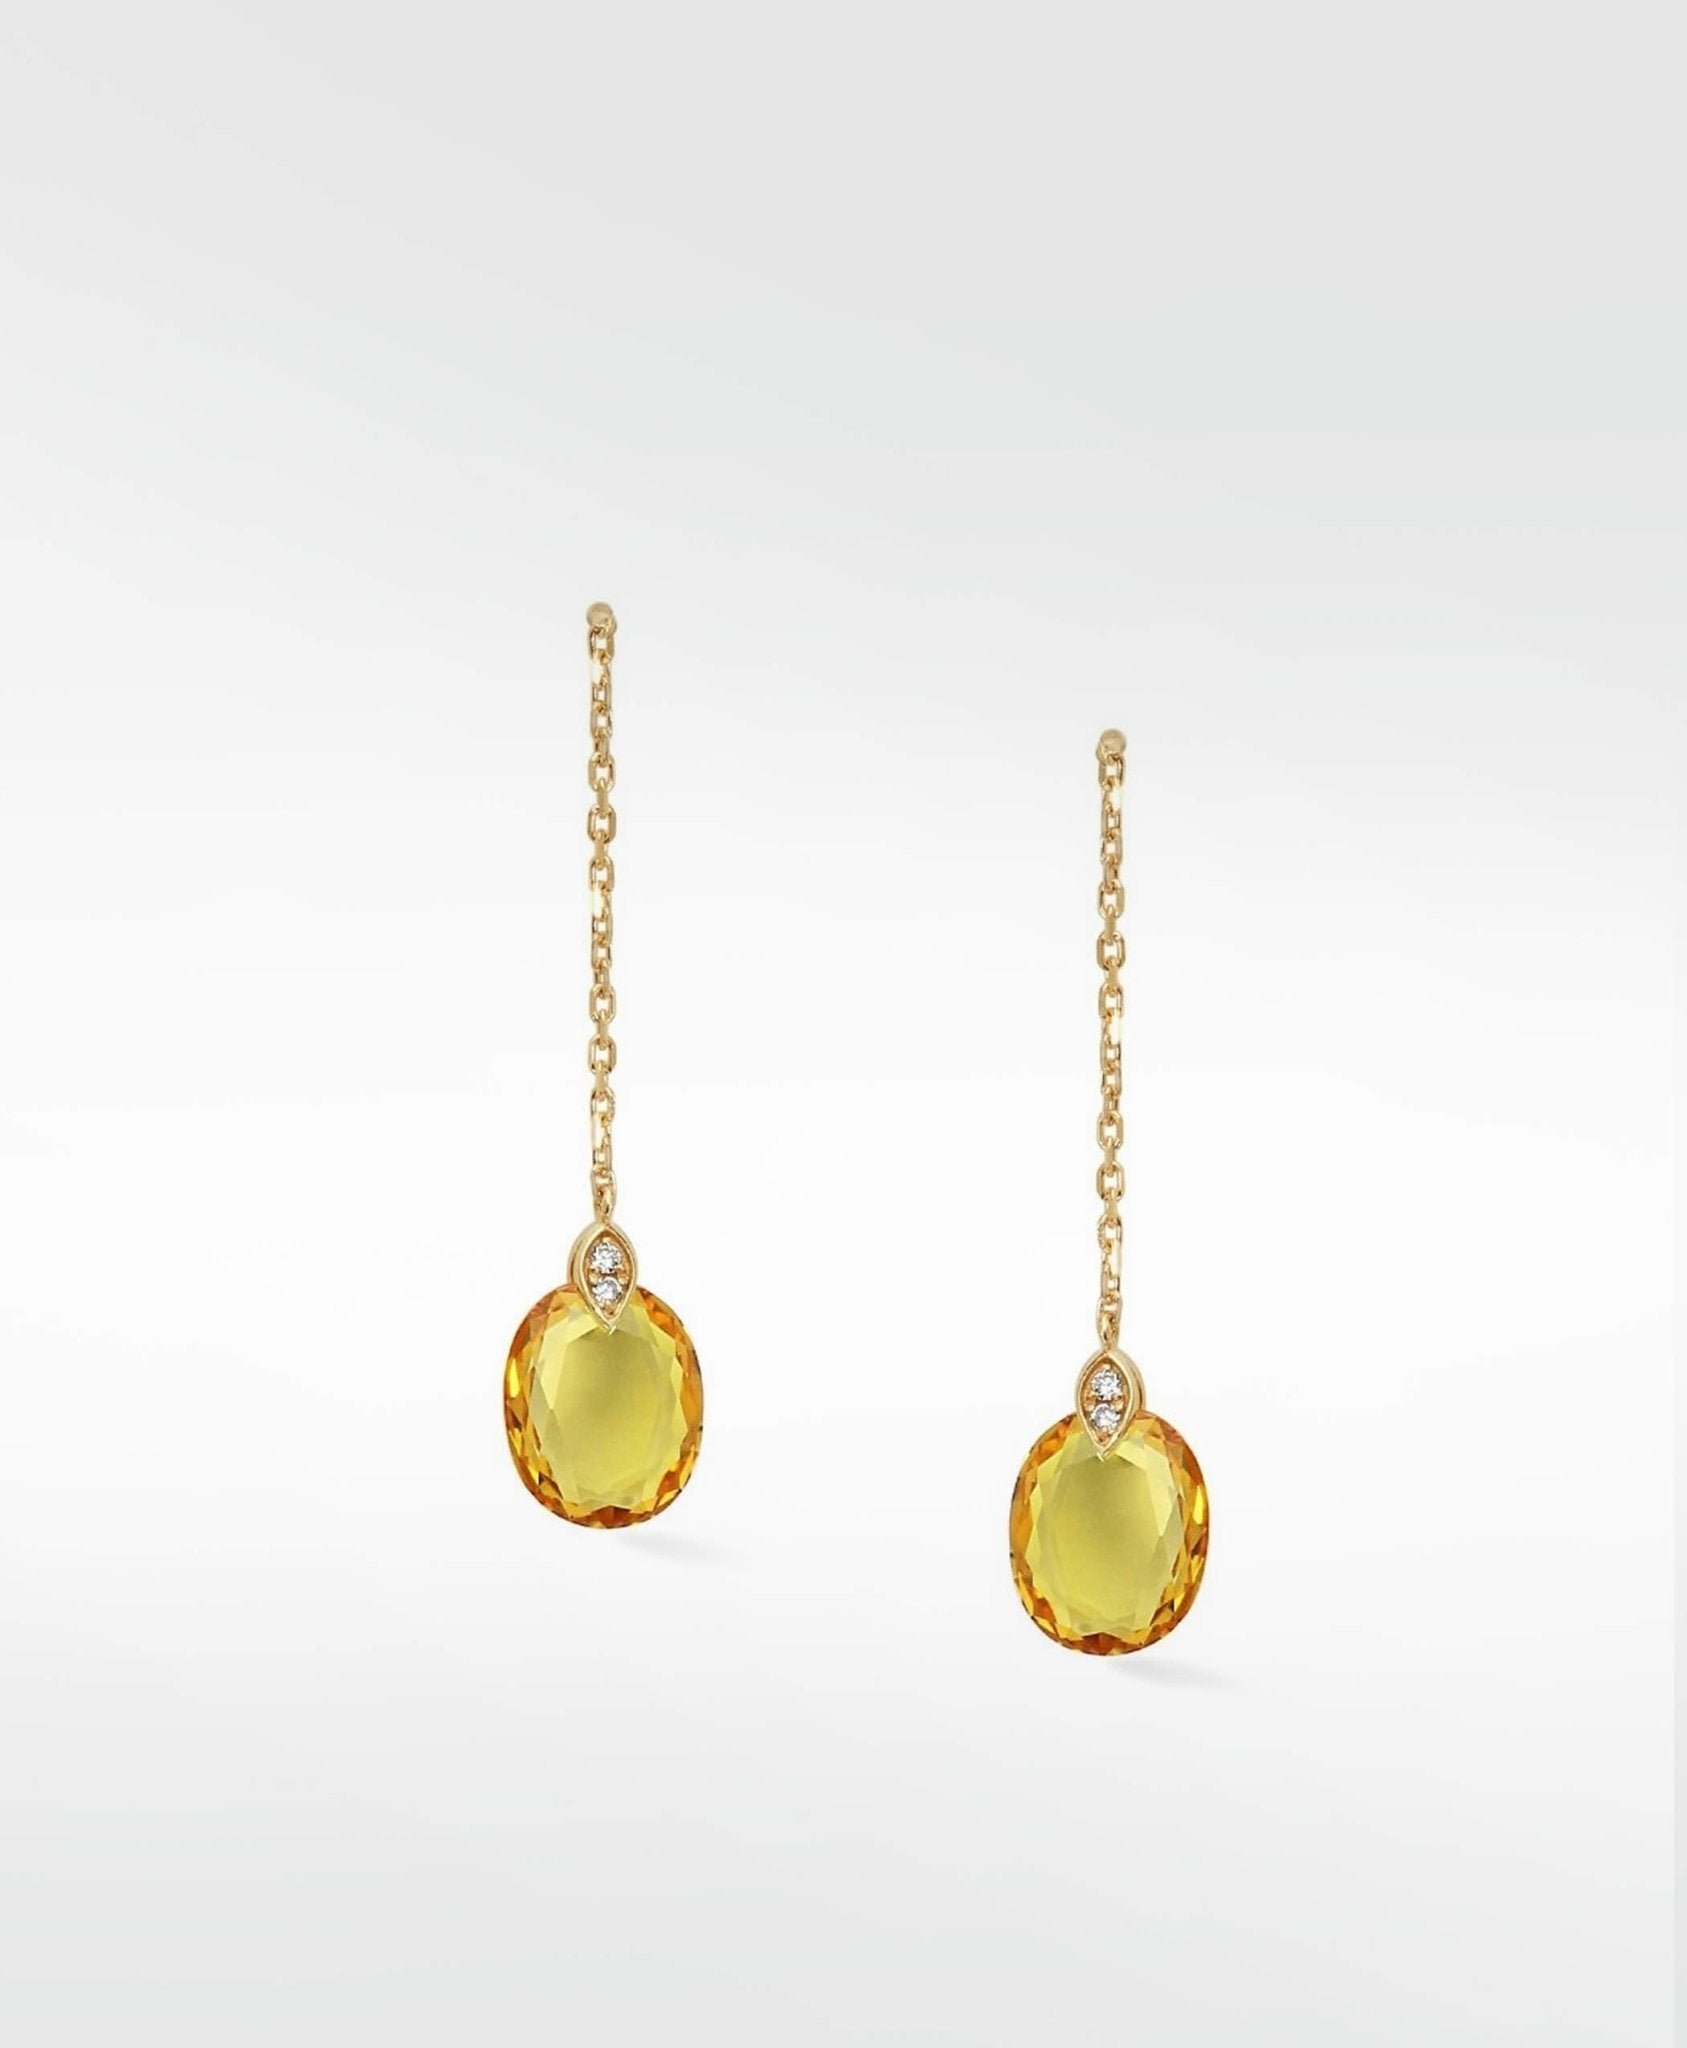 Alicia Burnt Orange Sapphire Drop Earrings in 14K Gold - Lark and Berry